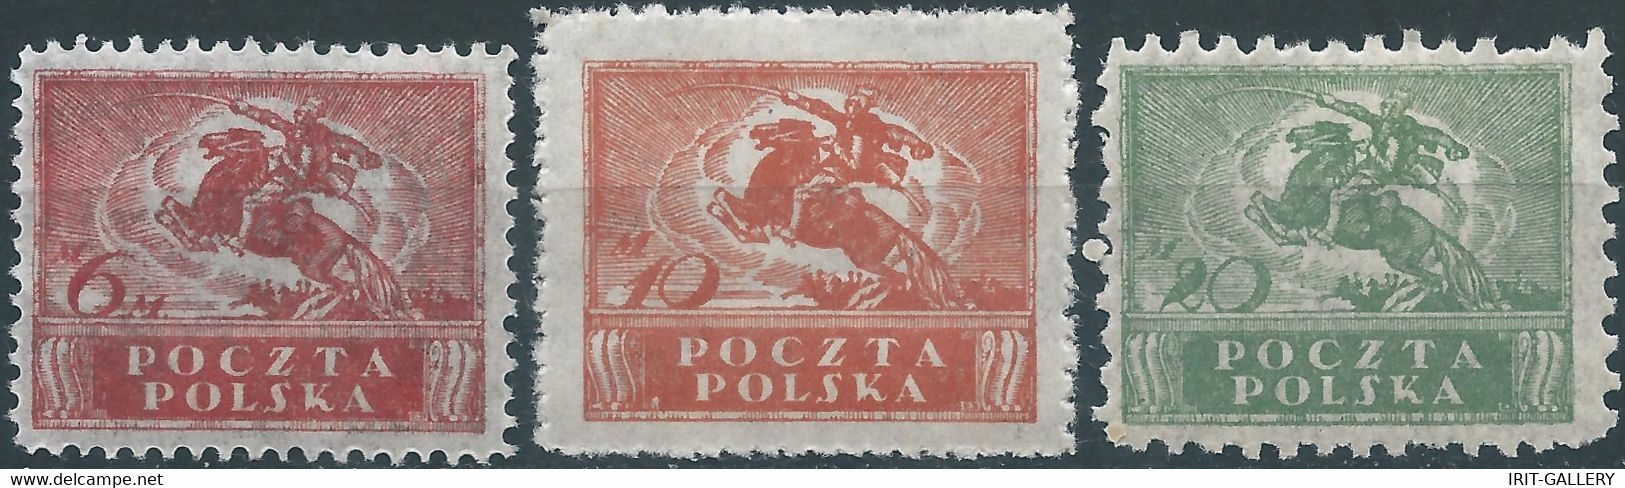 POLONIA-POLAND-POLSKA,1919 South And North Poland Issues,Mint - Nuevos